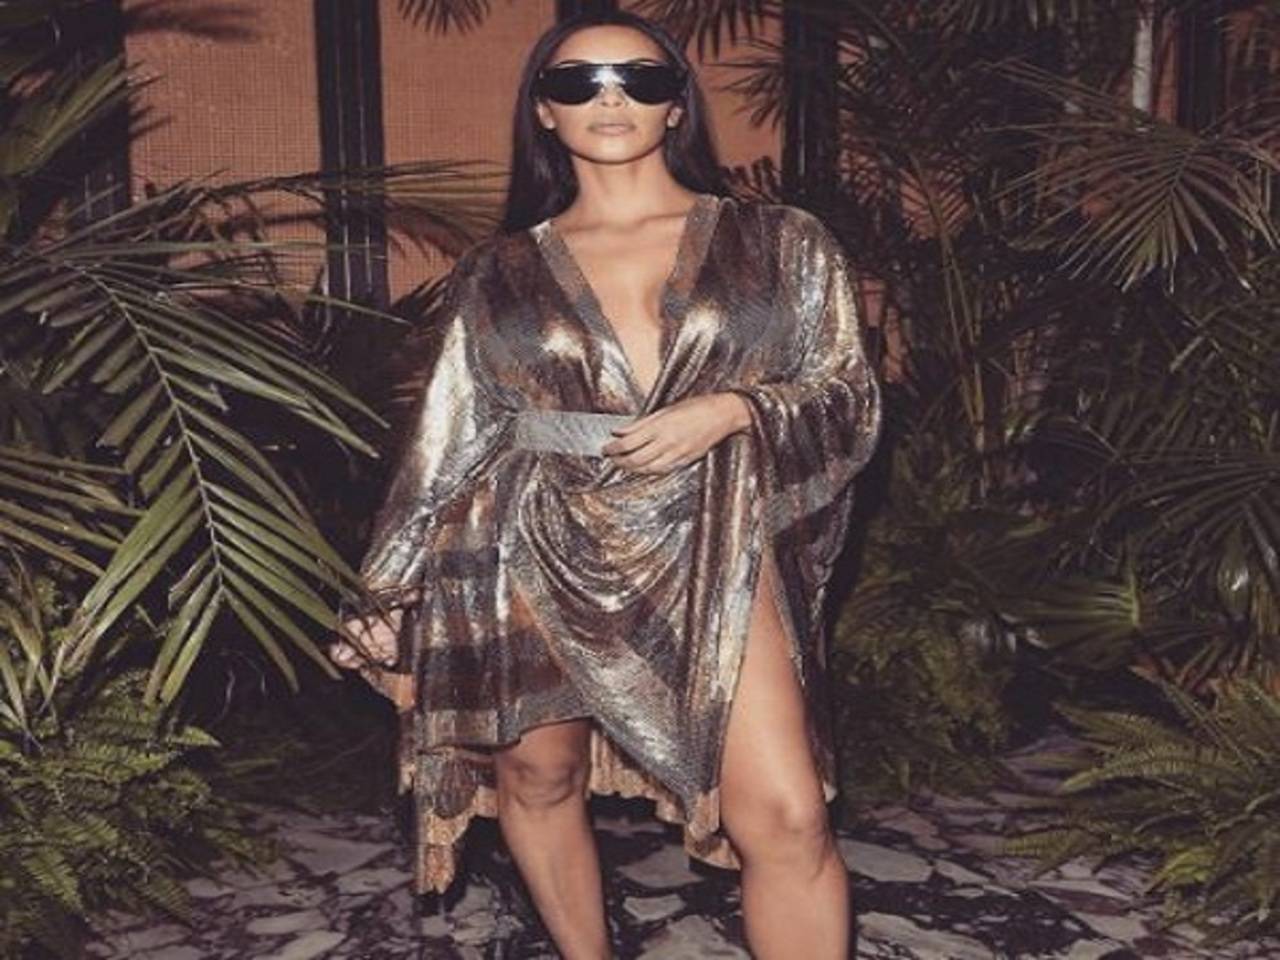 Offensive Kim Kardashian robbery victim Halloween costume REMOVED